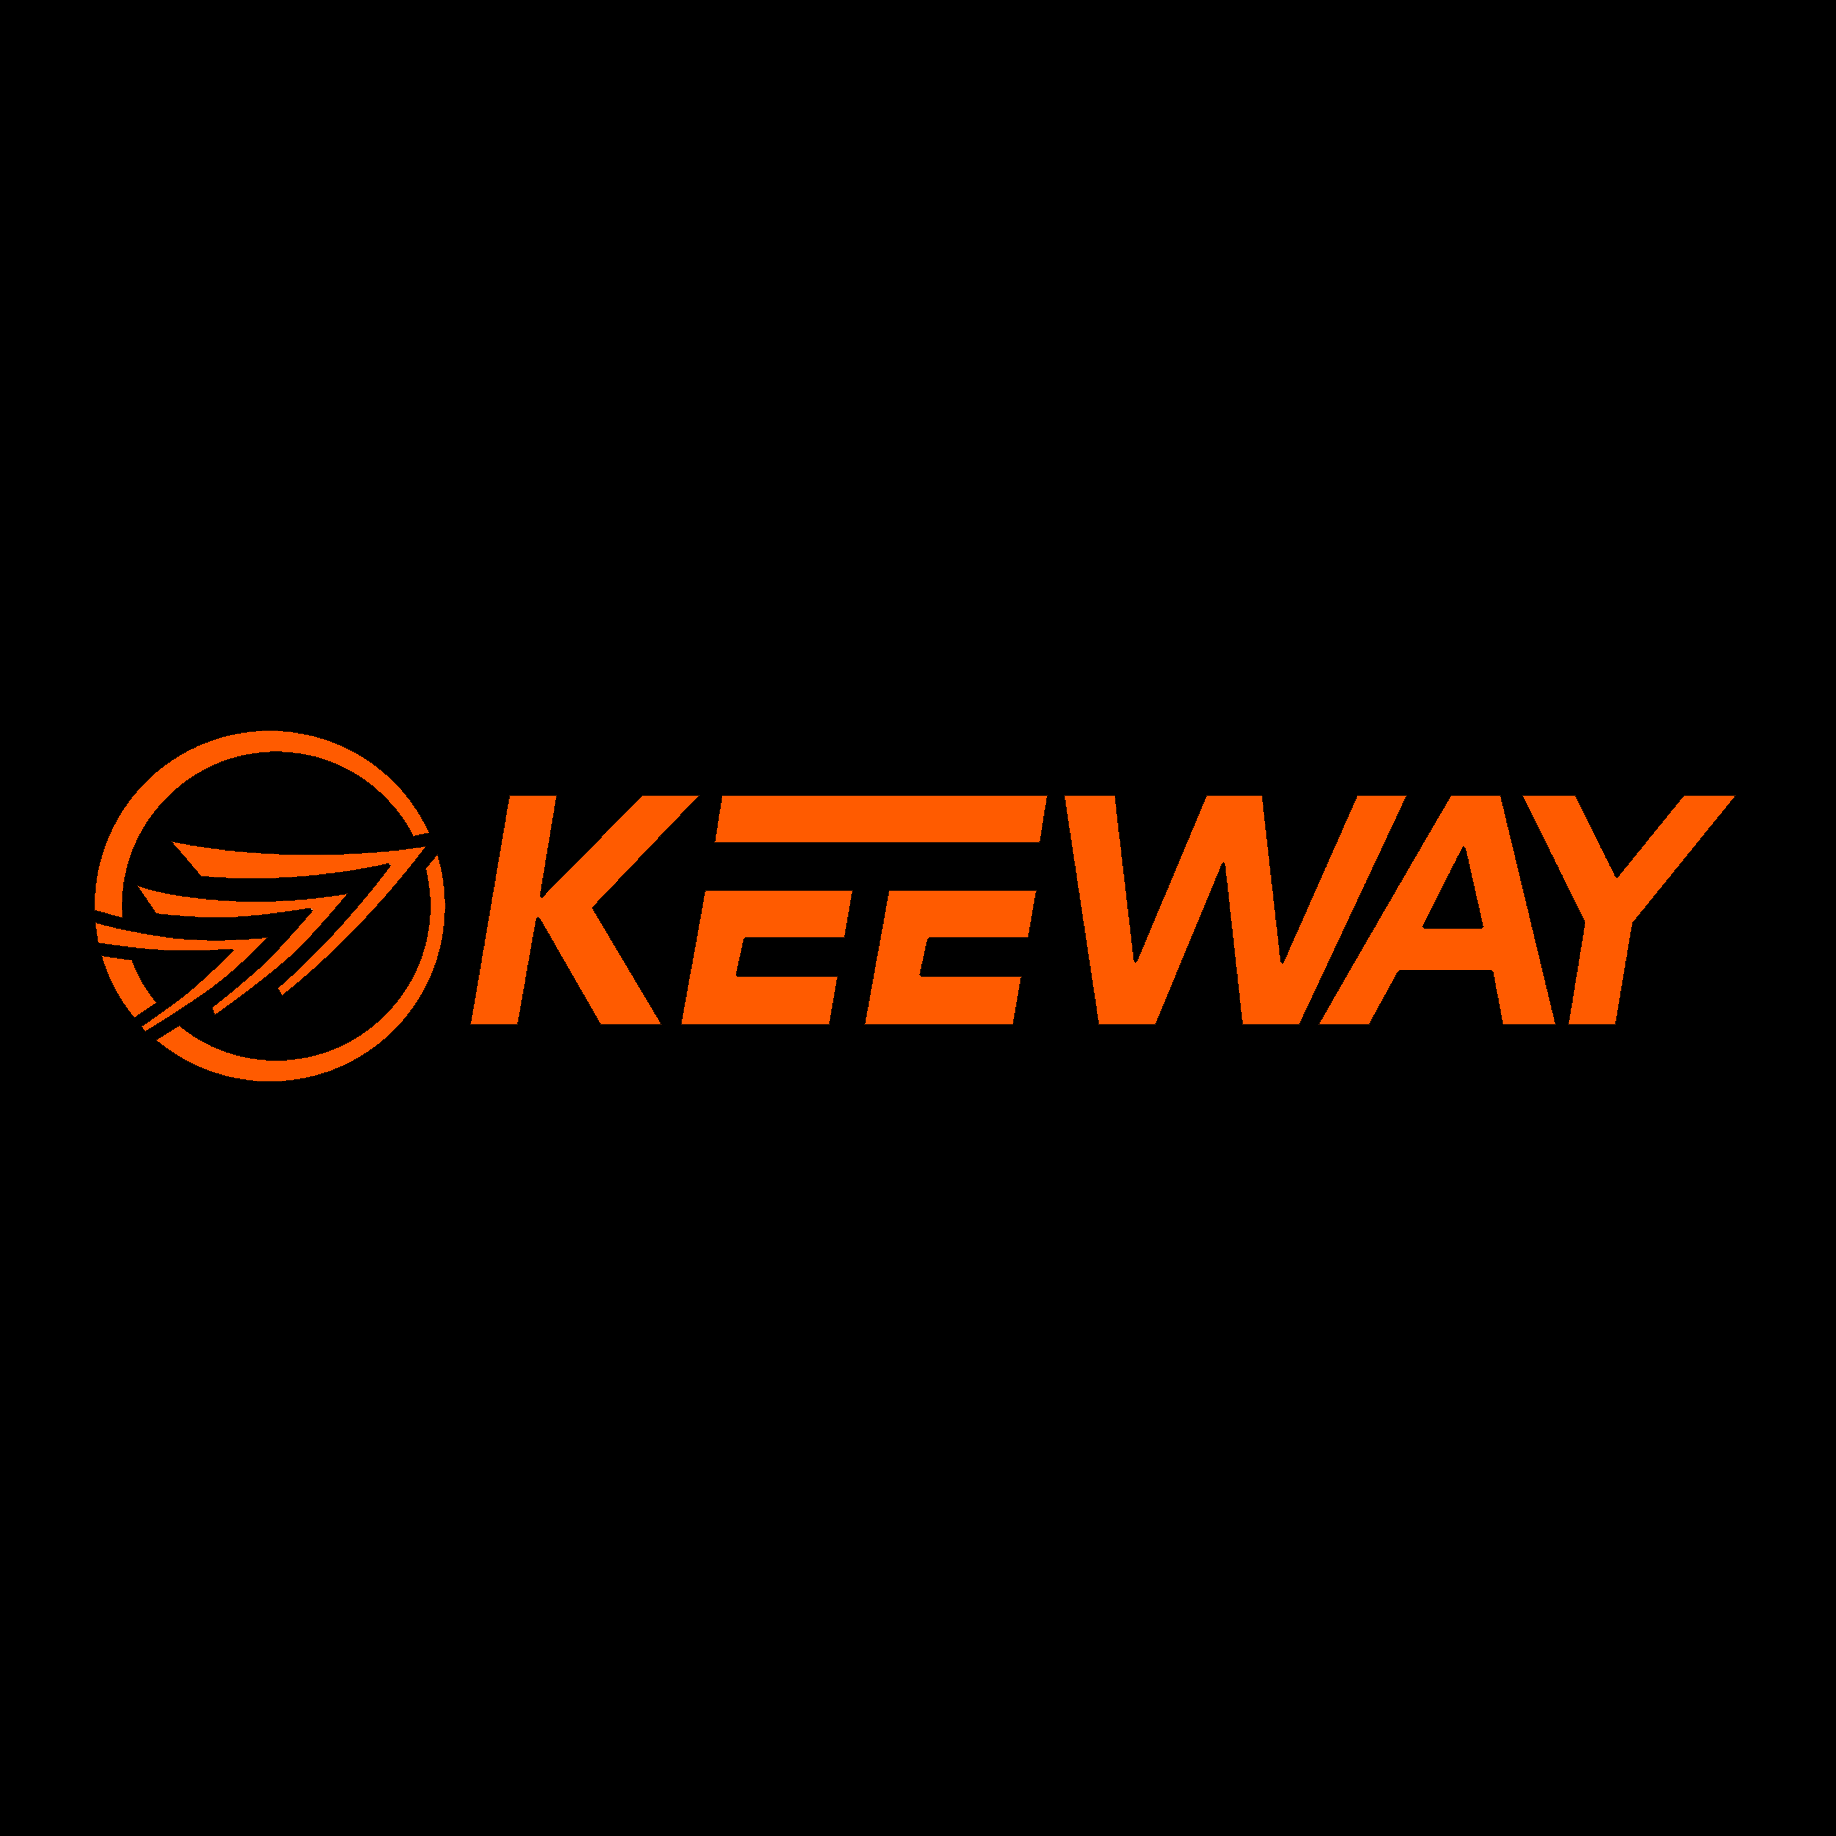 keeway-logo-1836x508